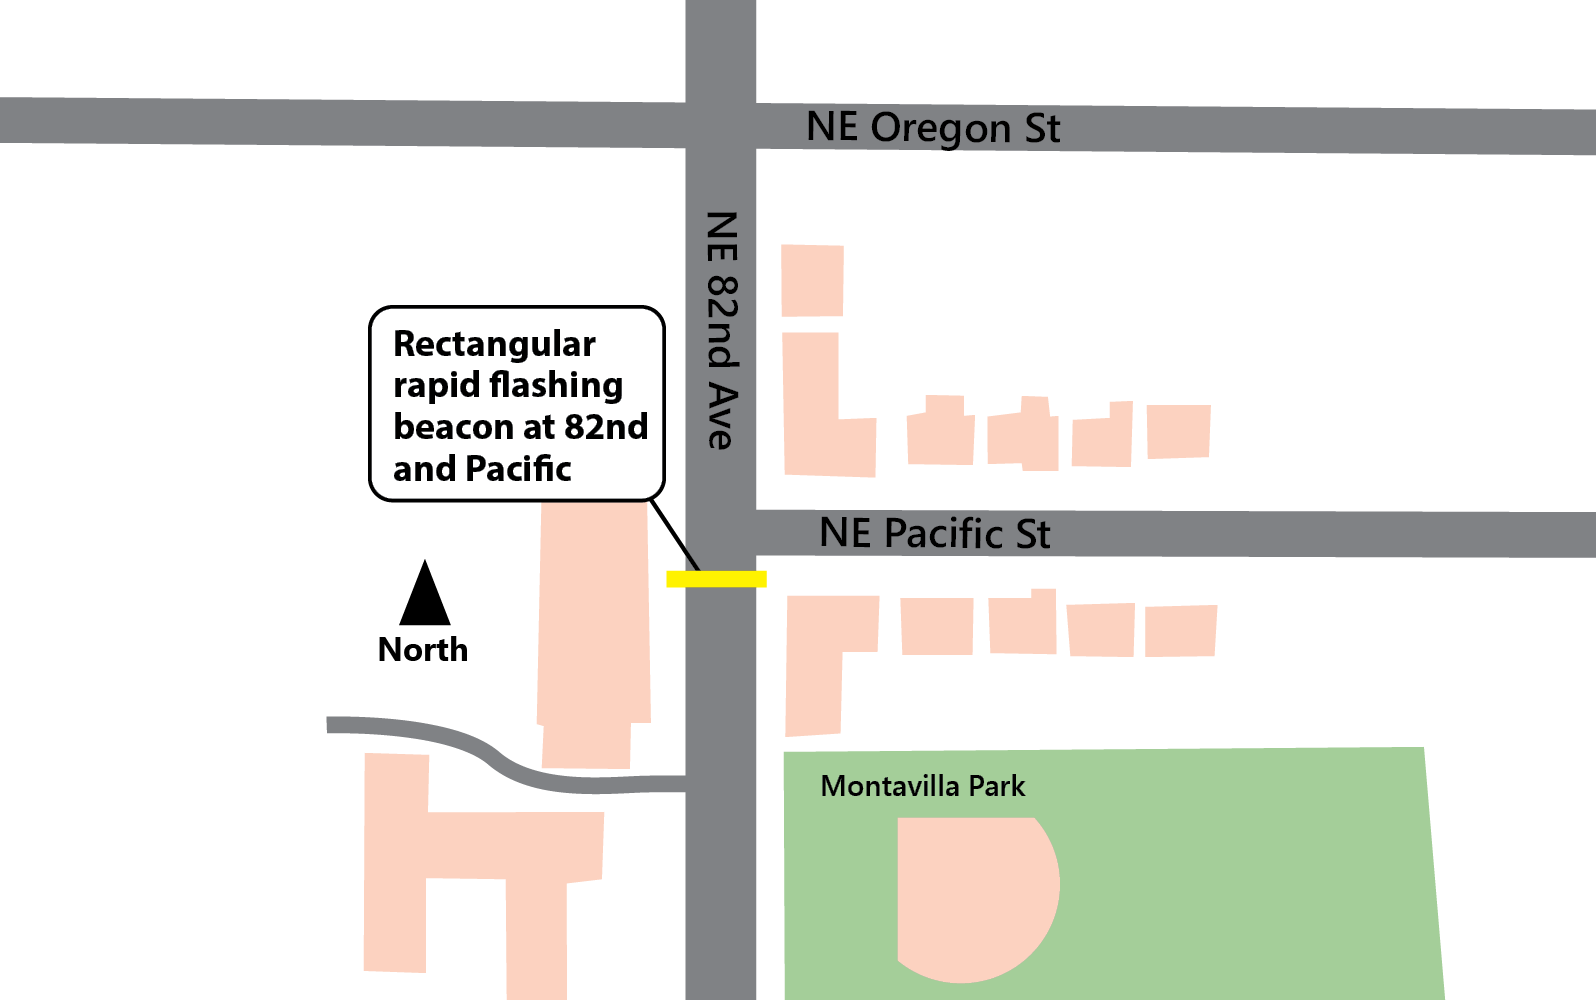 Rapid flashing beacon location shown on map on NE 82nd Avenue at NE Pacific Street, just north of Montavilla Park